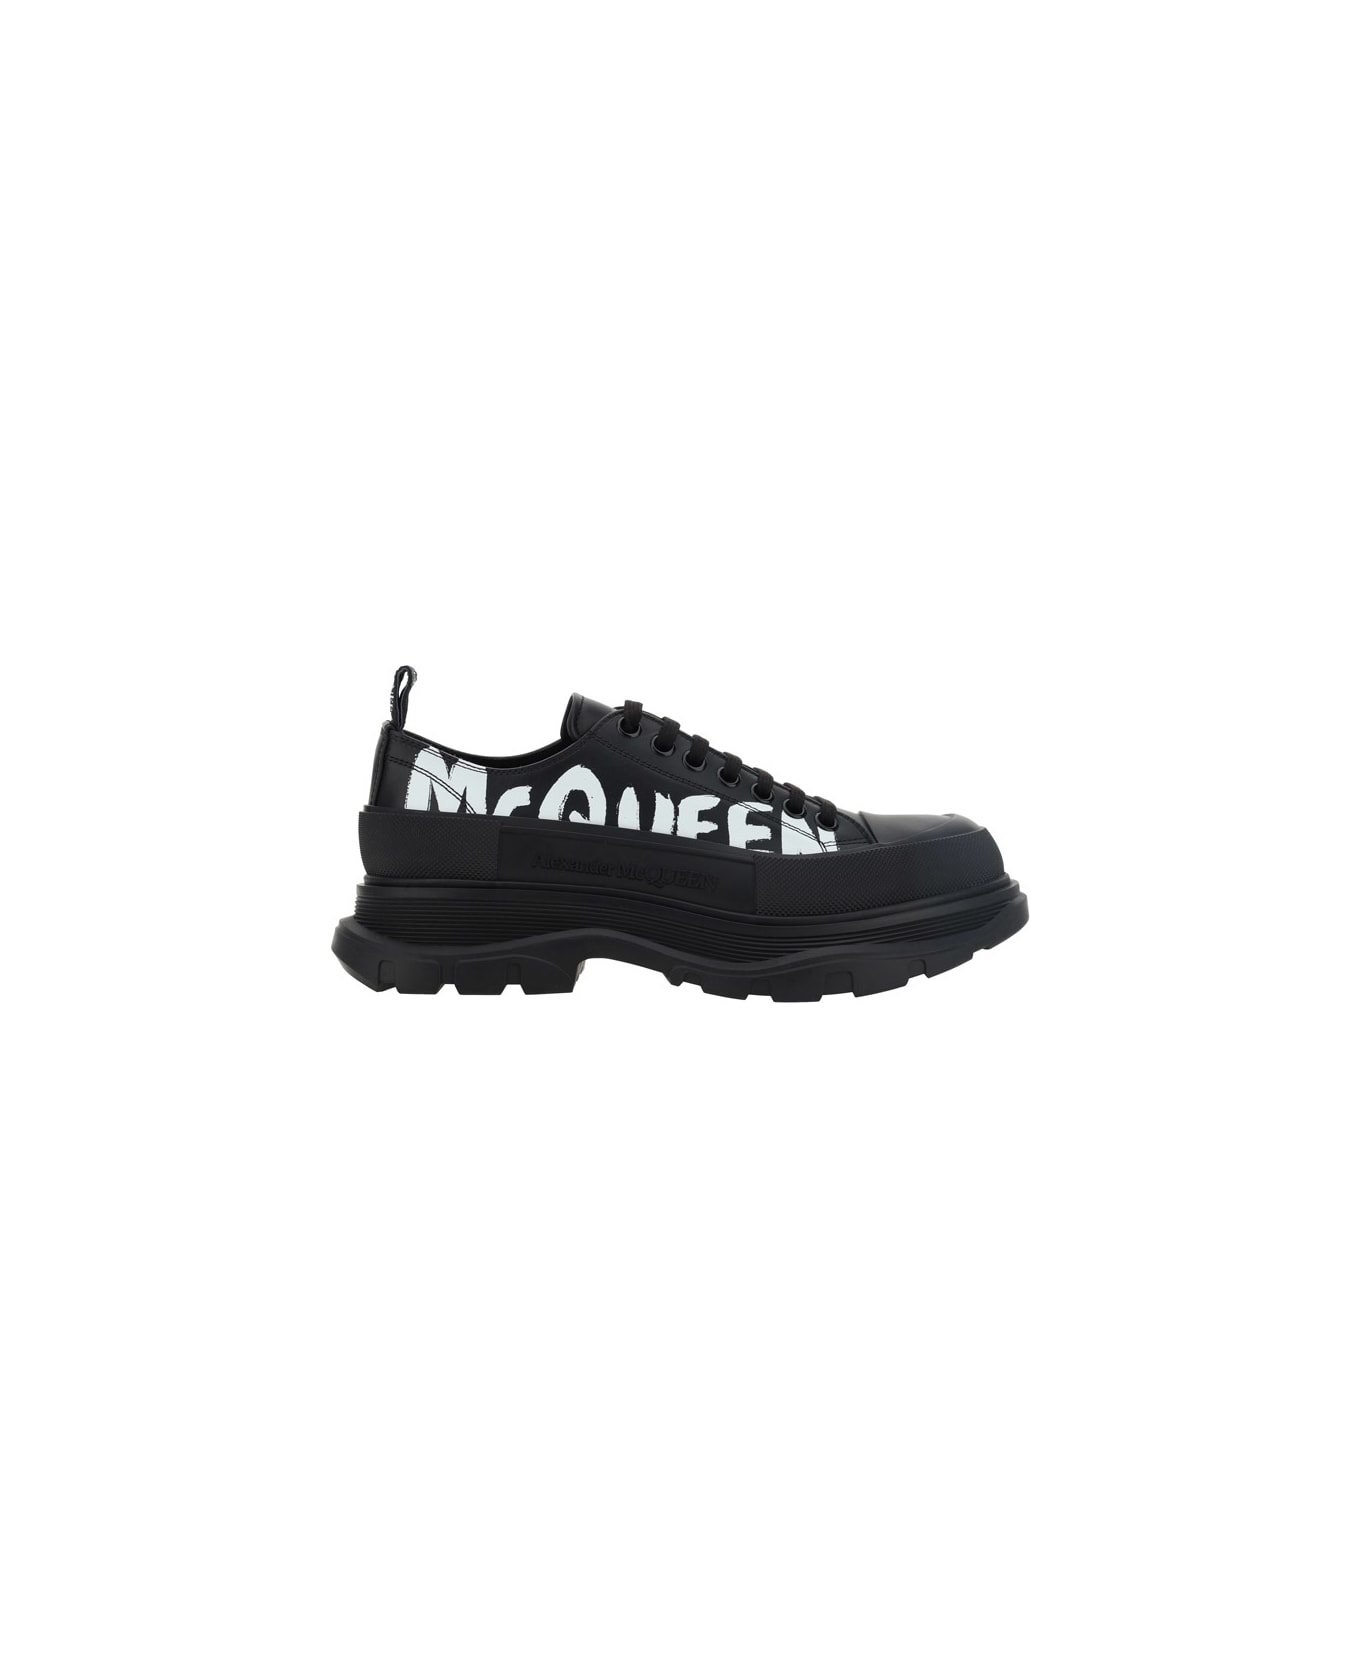 Alexander McQueen Tread Slick Sneakers - Black/white スニーカー